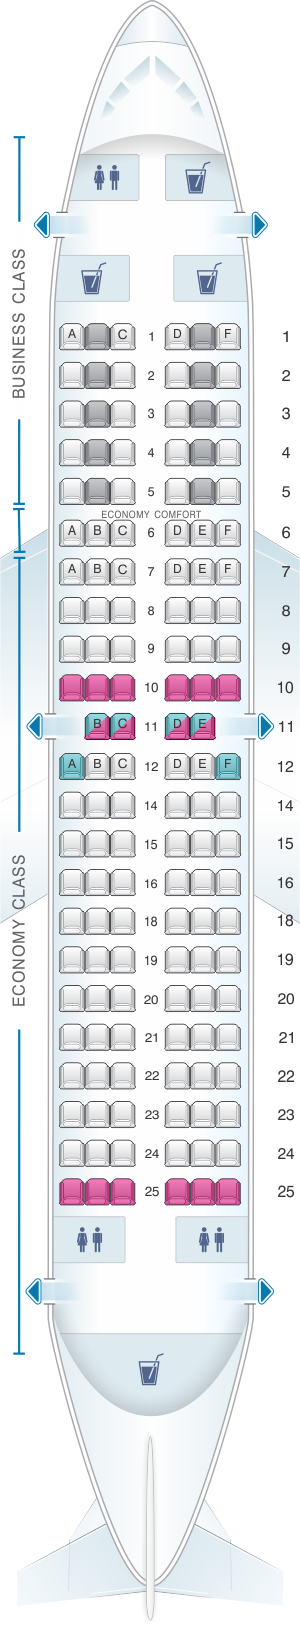 Klm Plane Seating Chart